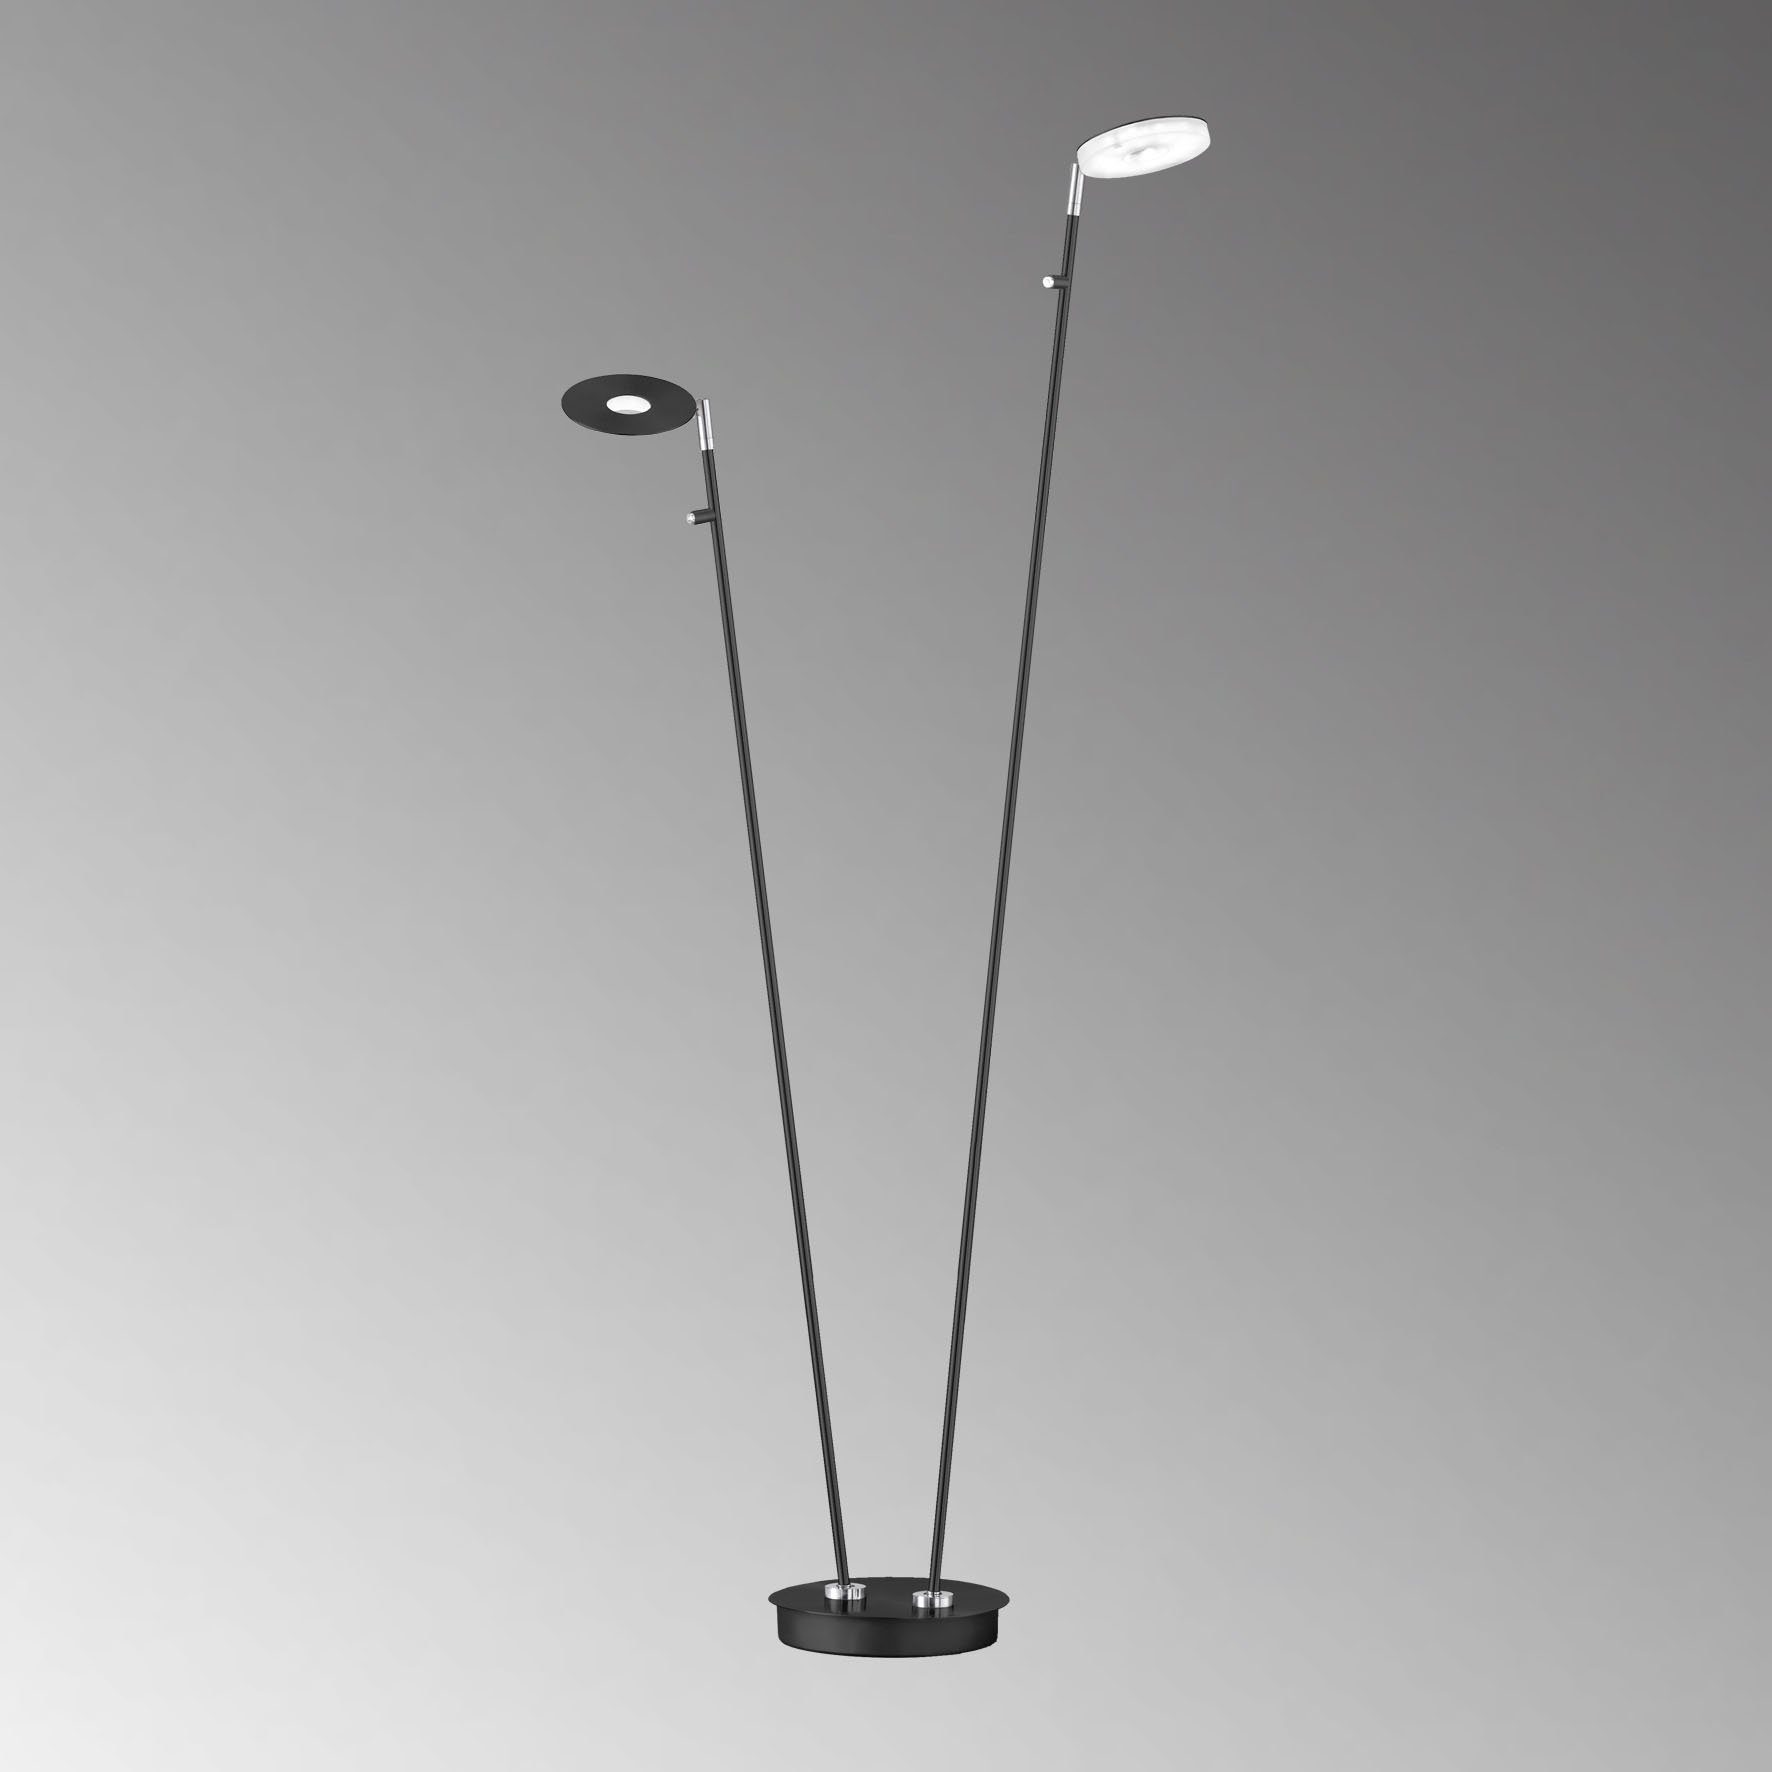 FISCHER & HONSEL LED Stehlampe kaltweiß Dimmfunktion, - warmweiß LED integriert, Dent, fest